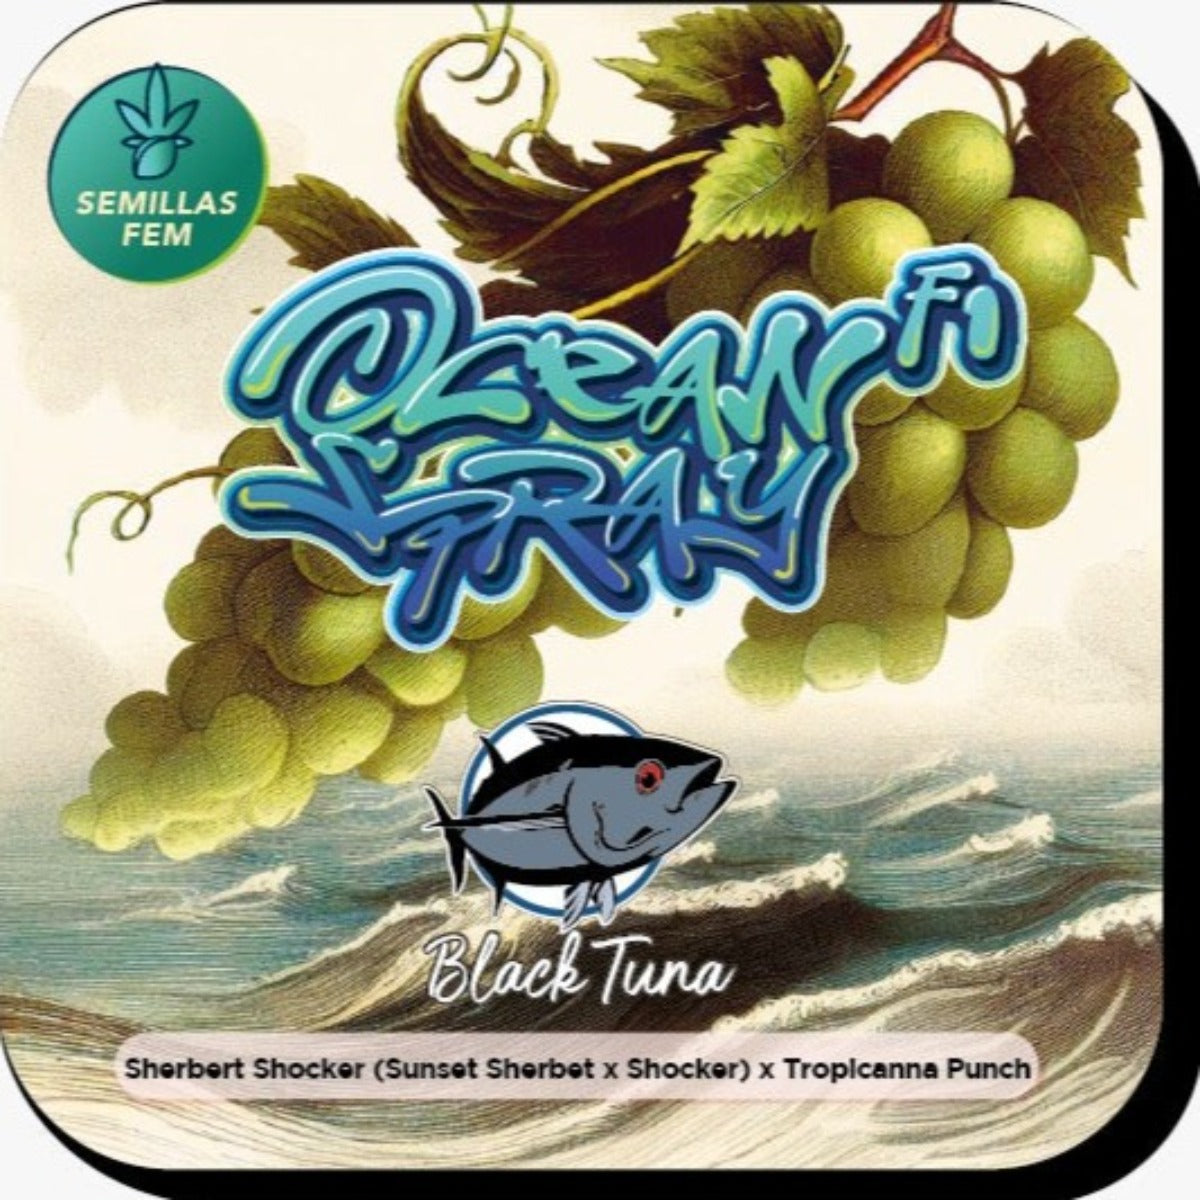 Ocean Spray Feminizada Pack x 3 - Black Tuna